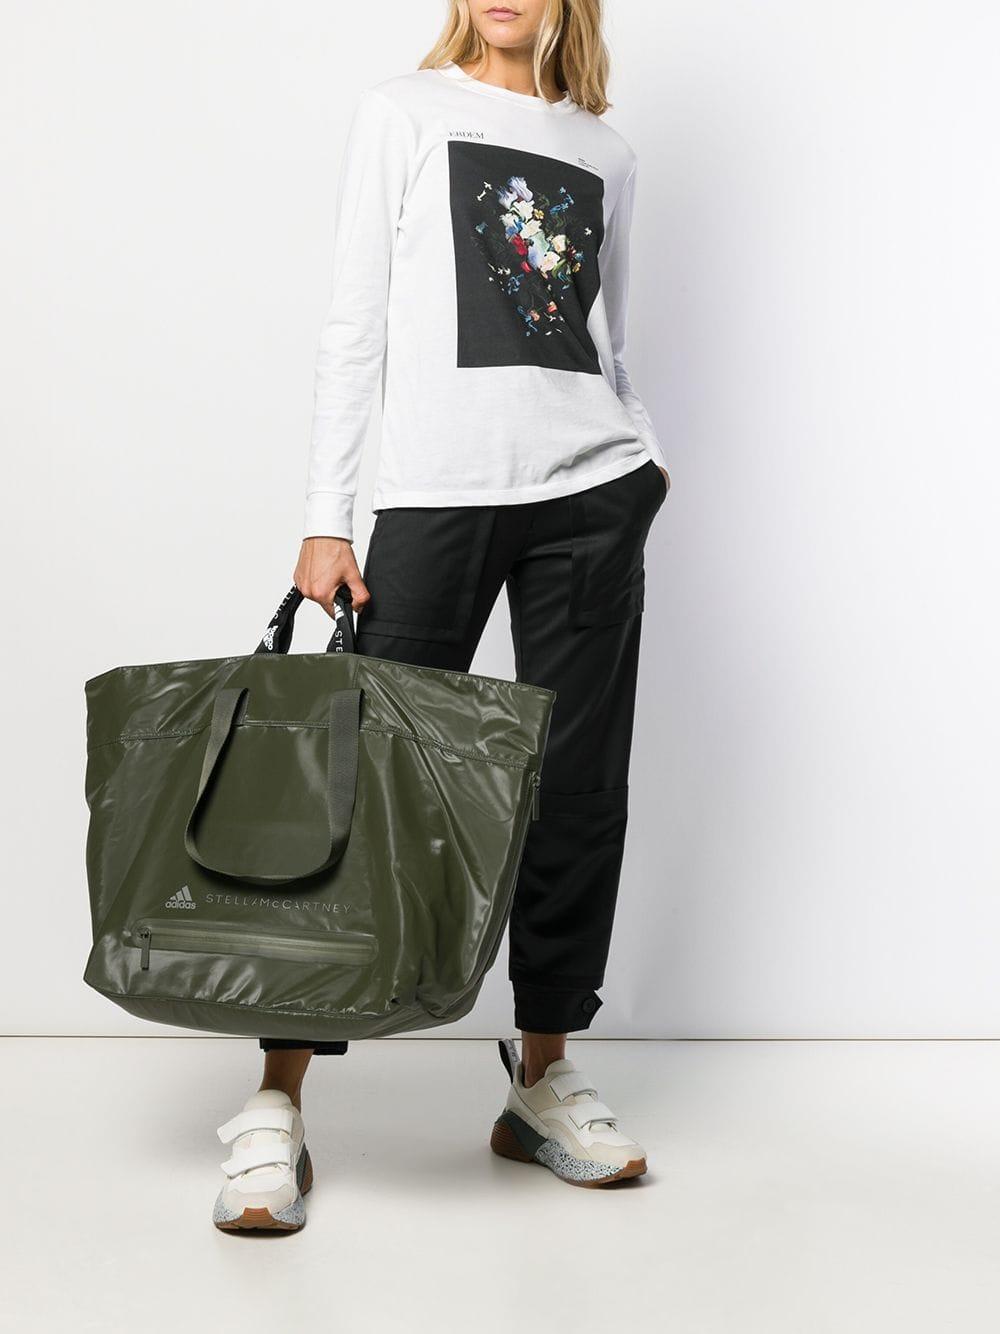 adidas By Stella McCartney Oversized Bag in Green | Lyst